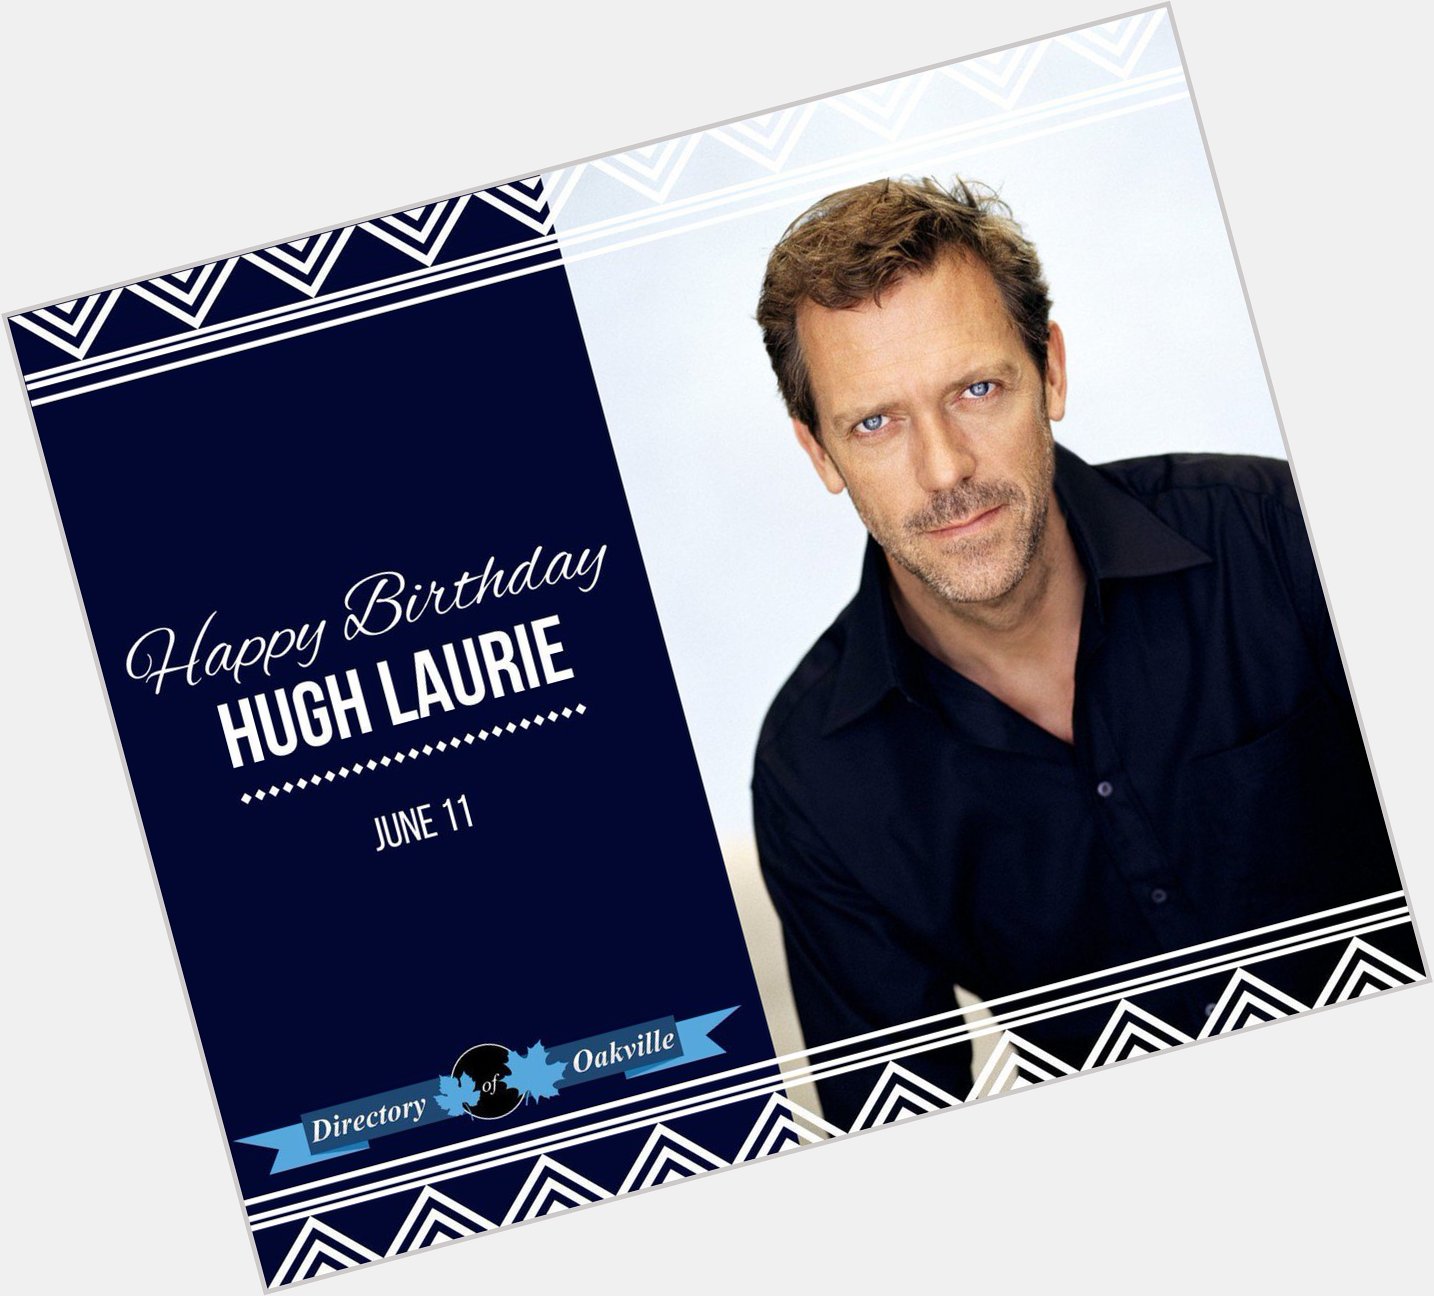 Happy Birthday!
Hugh Laurie born 11, 1959 